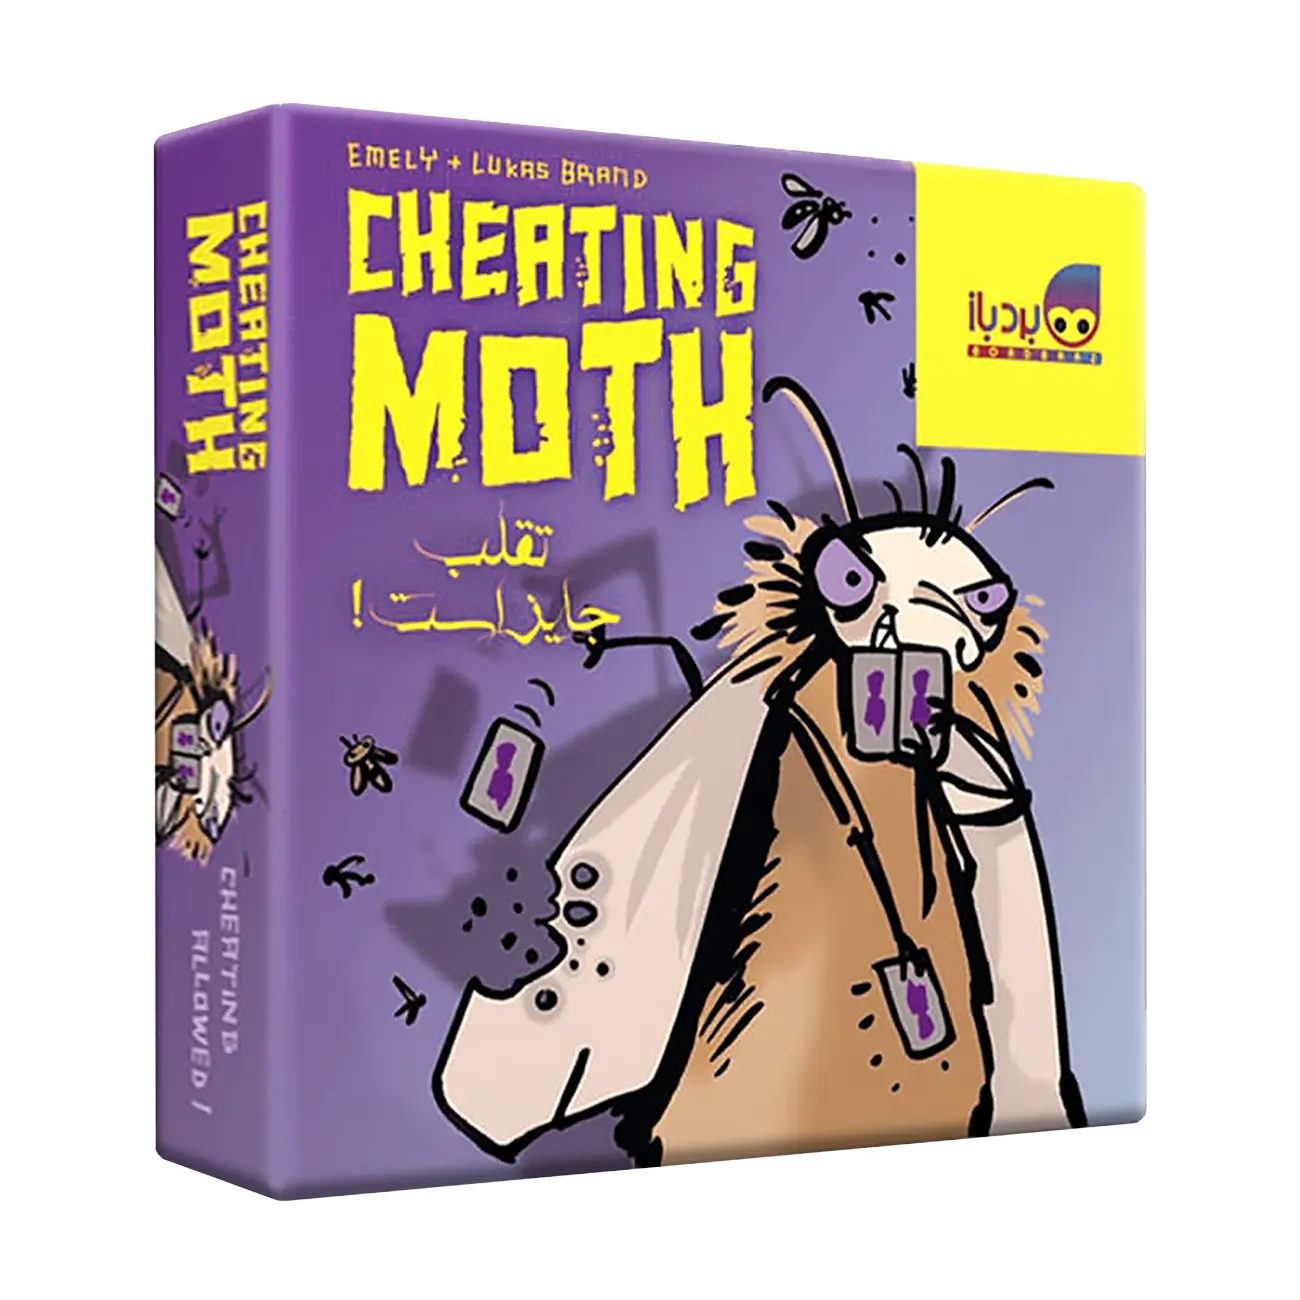 https://funiland.ir/wp-content/uploads/2023/06/cheating-moth.webp